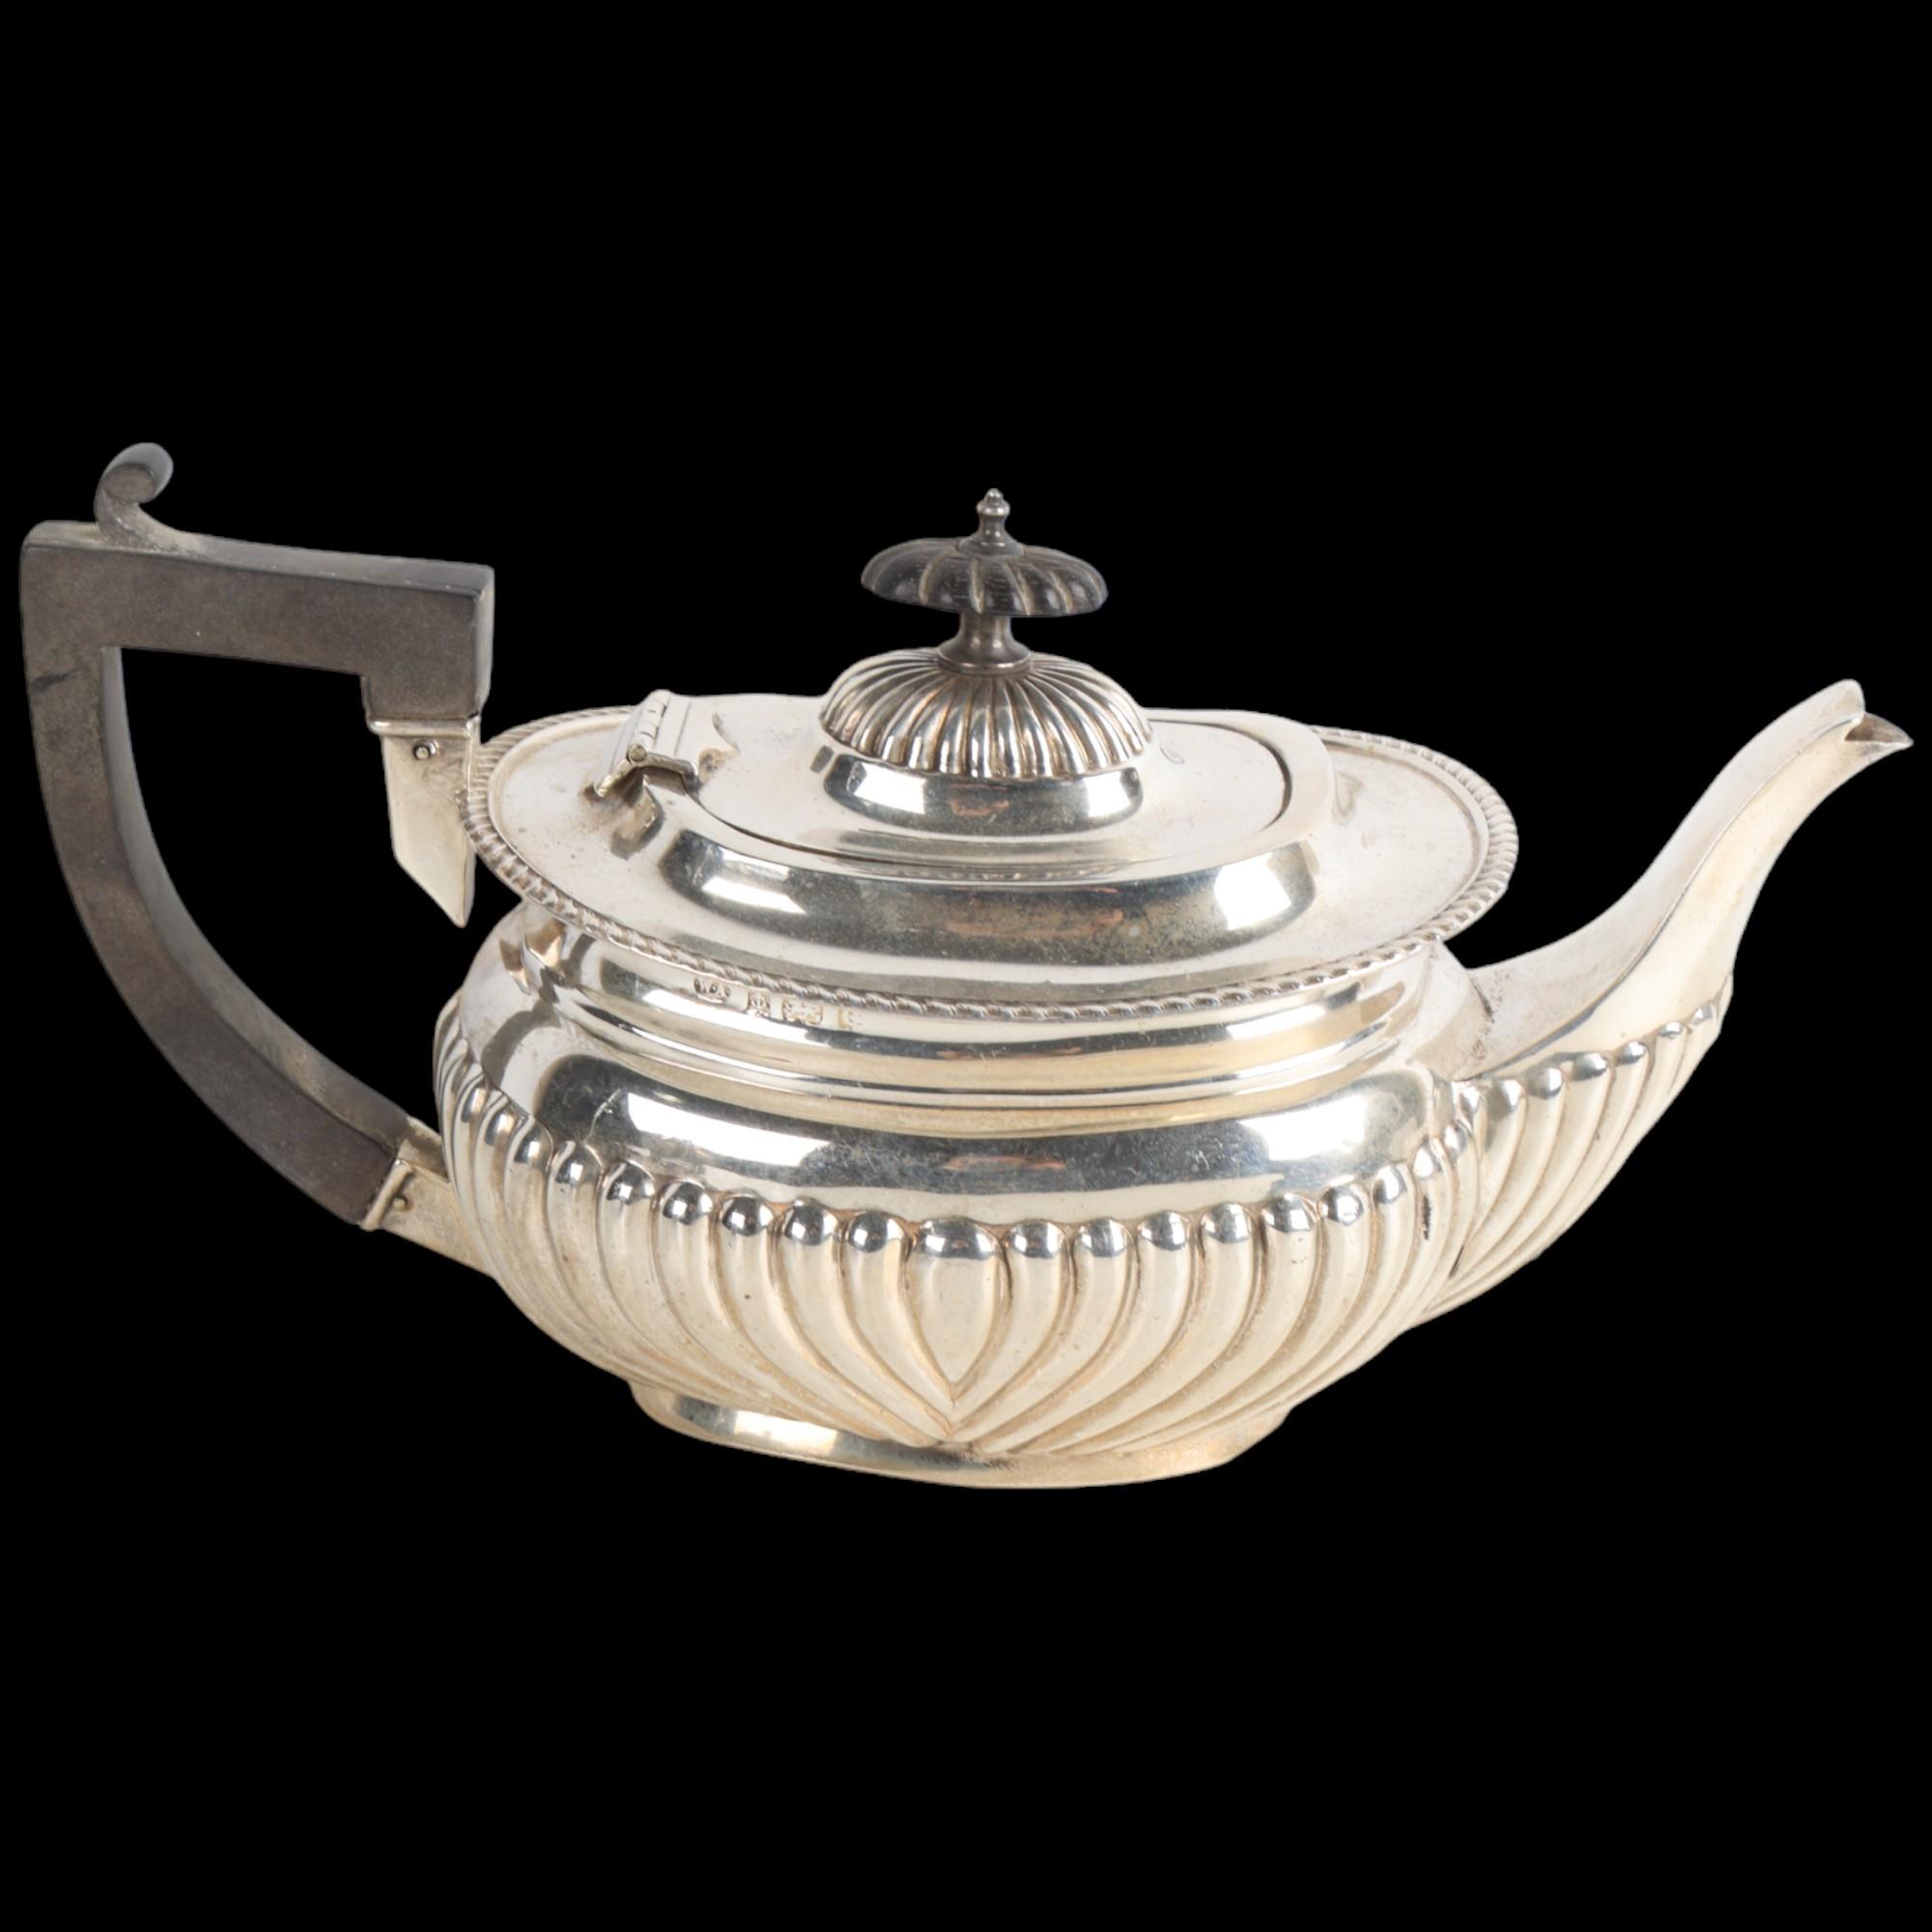 An Edwardian silver bachelor's teapot, William Aitken, Birmingham 1902, oval bulbous form with